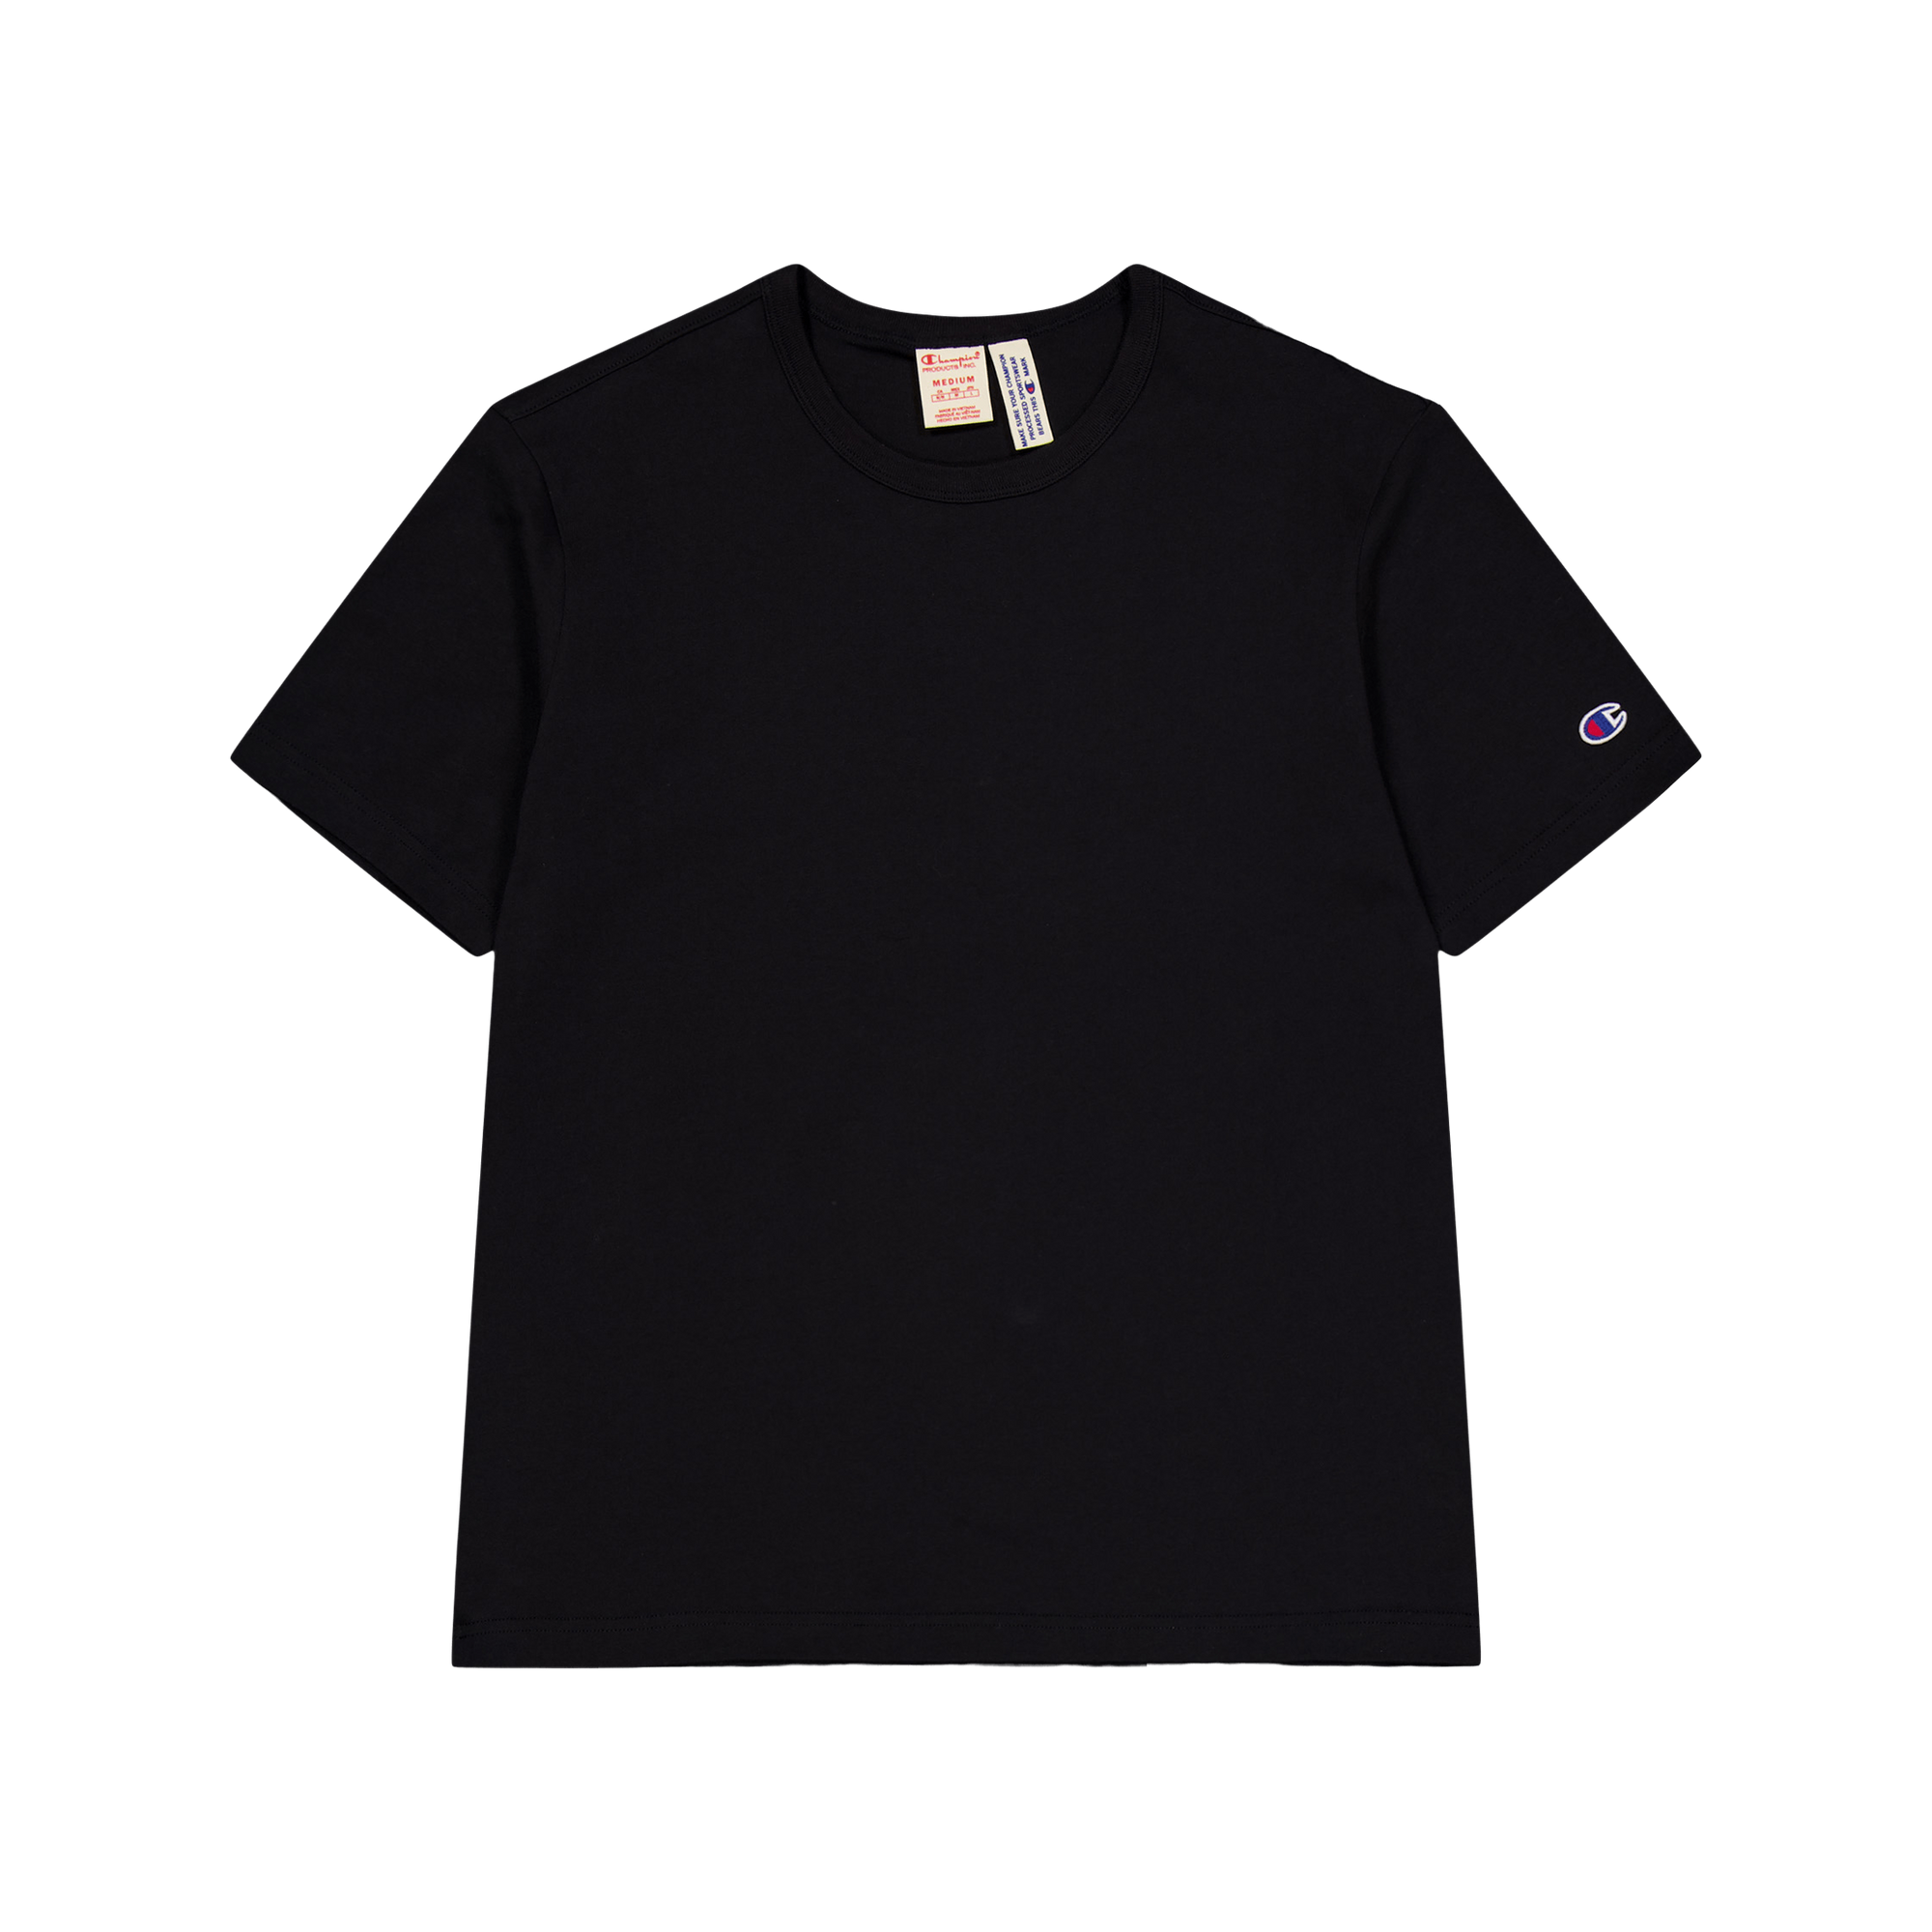 Crewneck T-shirt Black